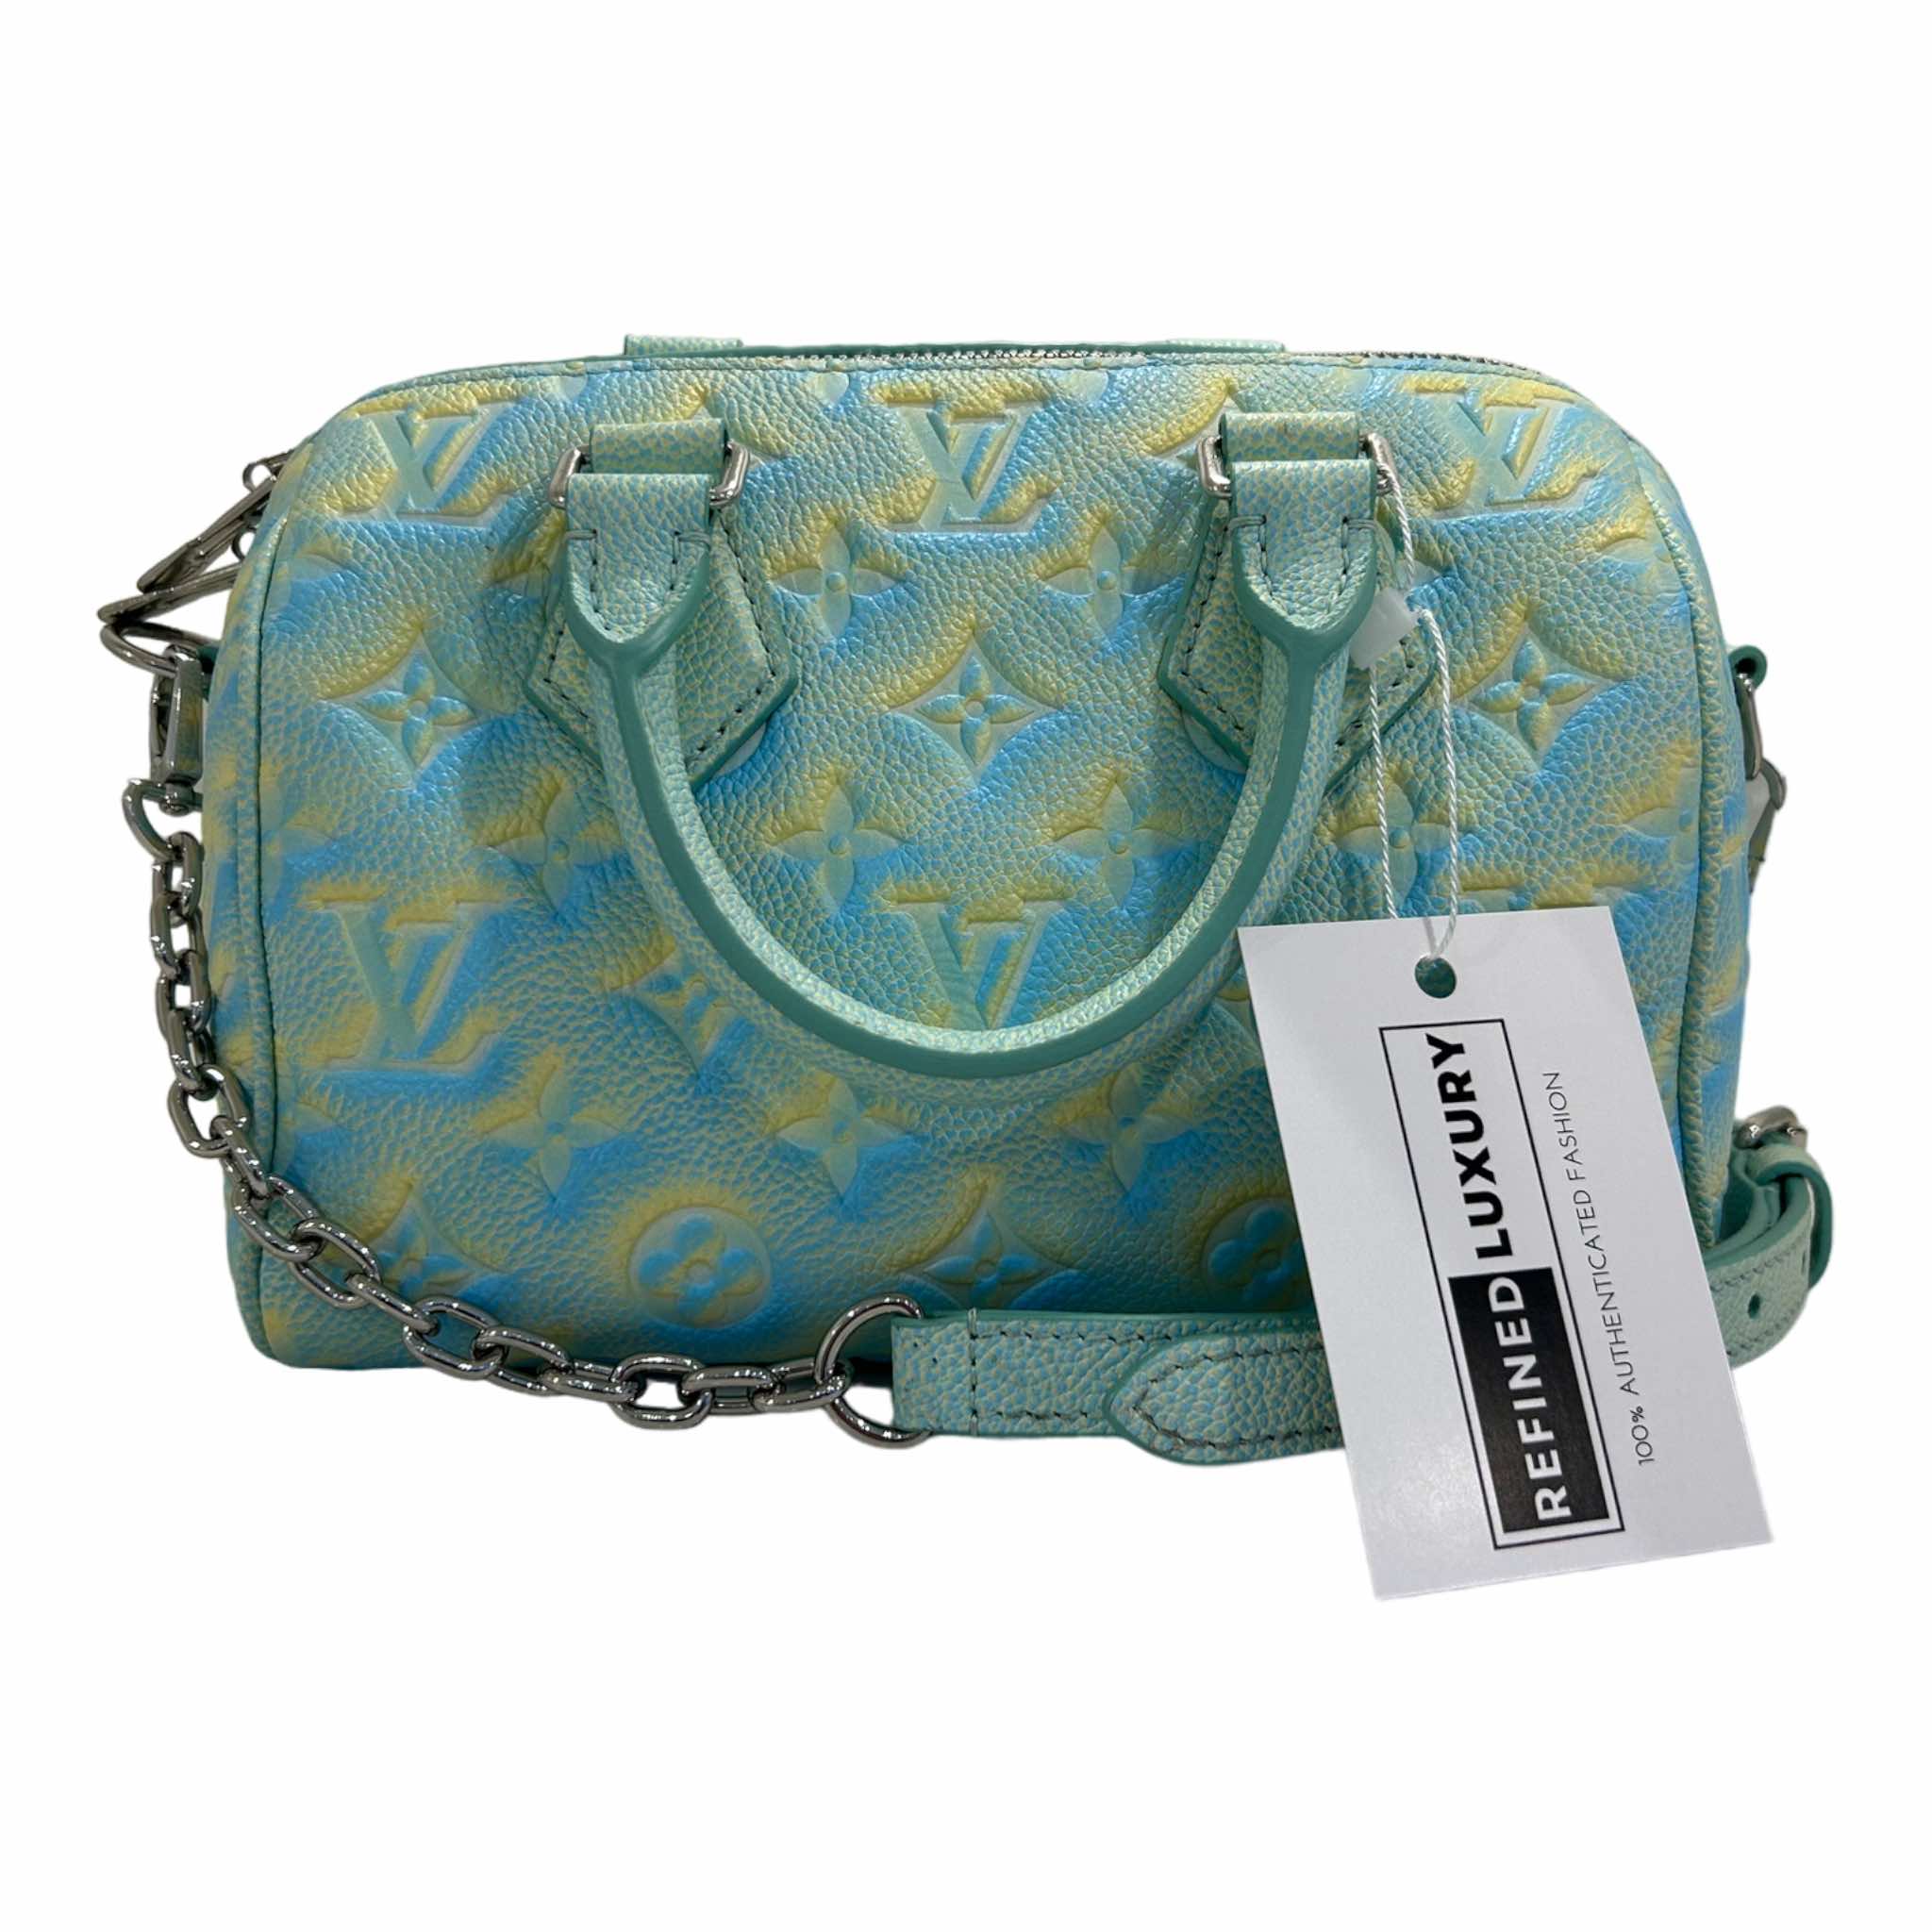 Speedy bandoulière leather handbag Louis Vuitton Turquoise in